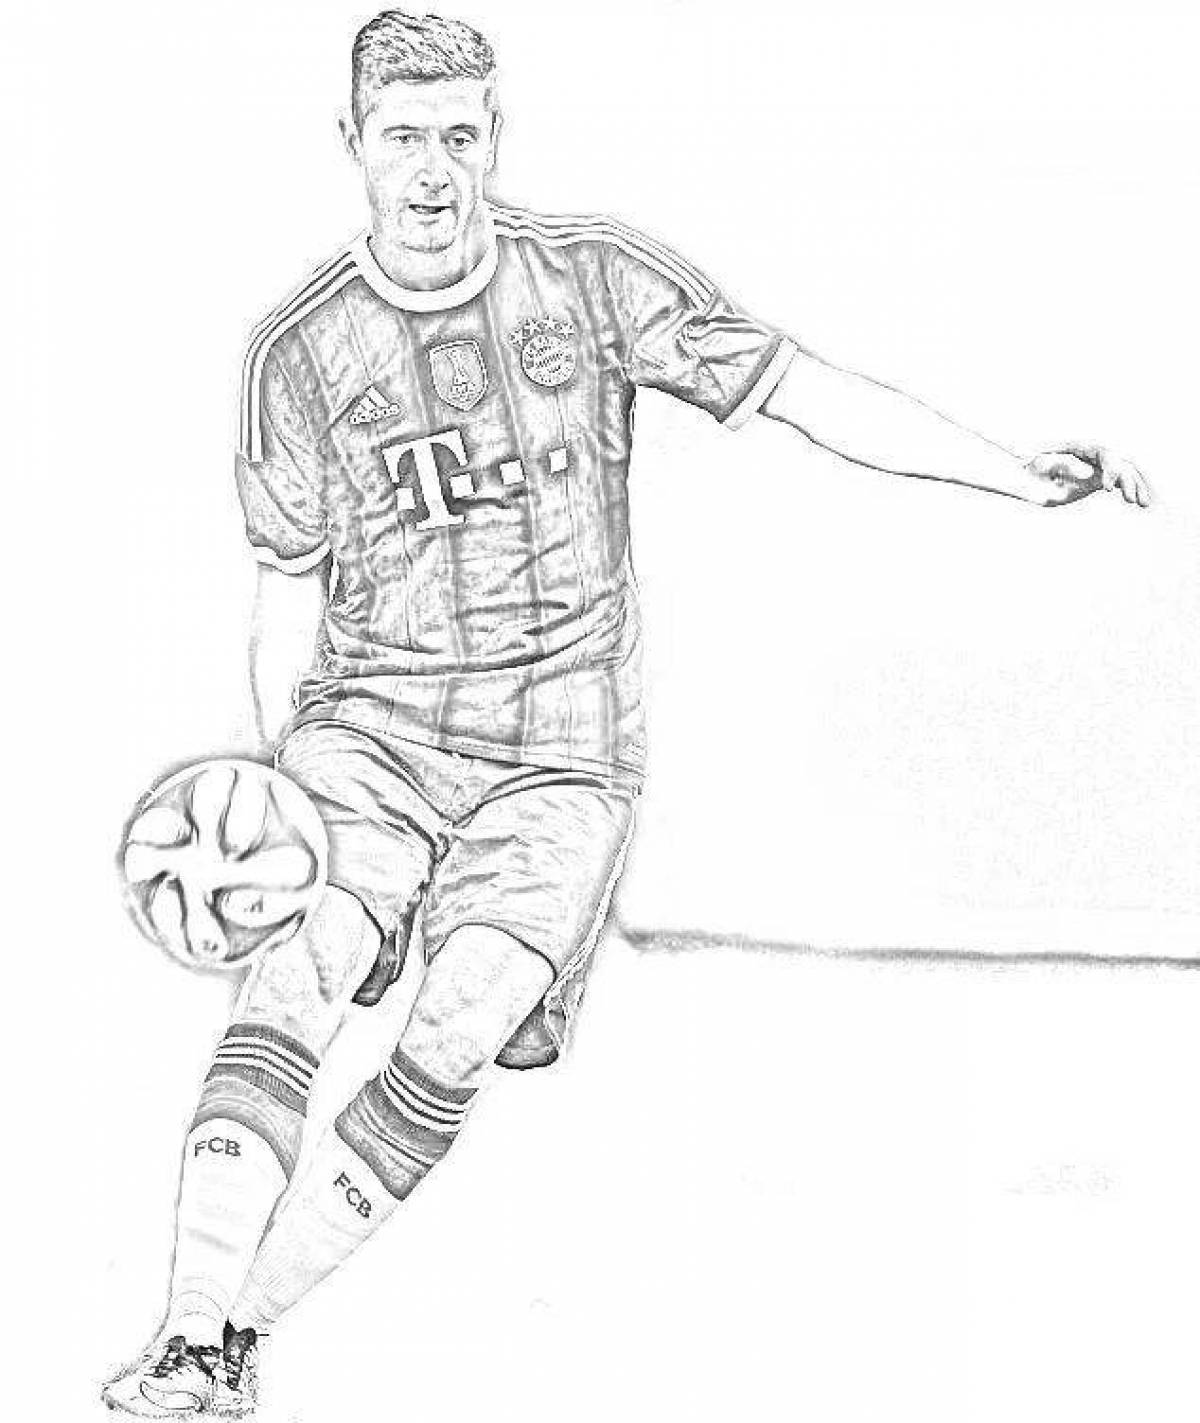 Lewandowski fun coloring